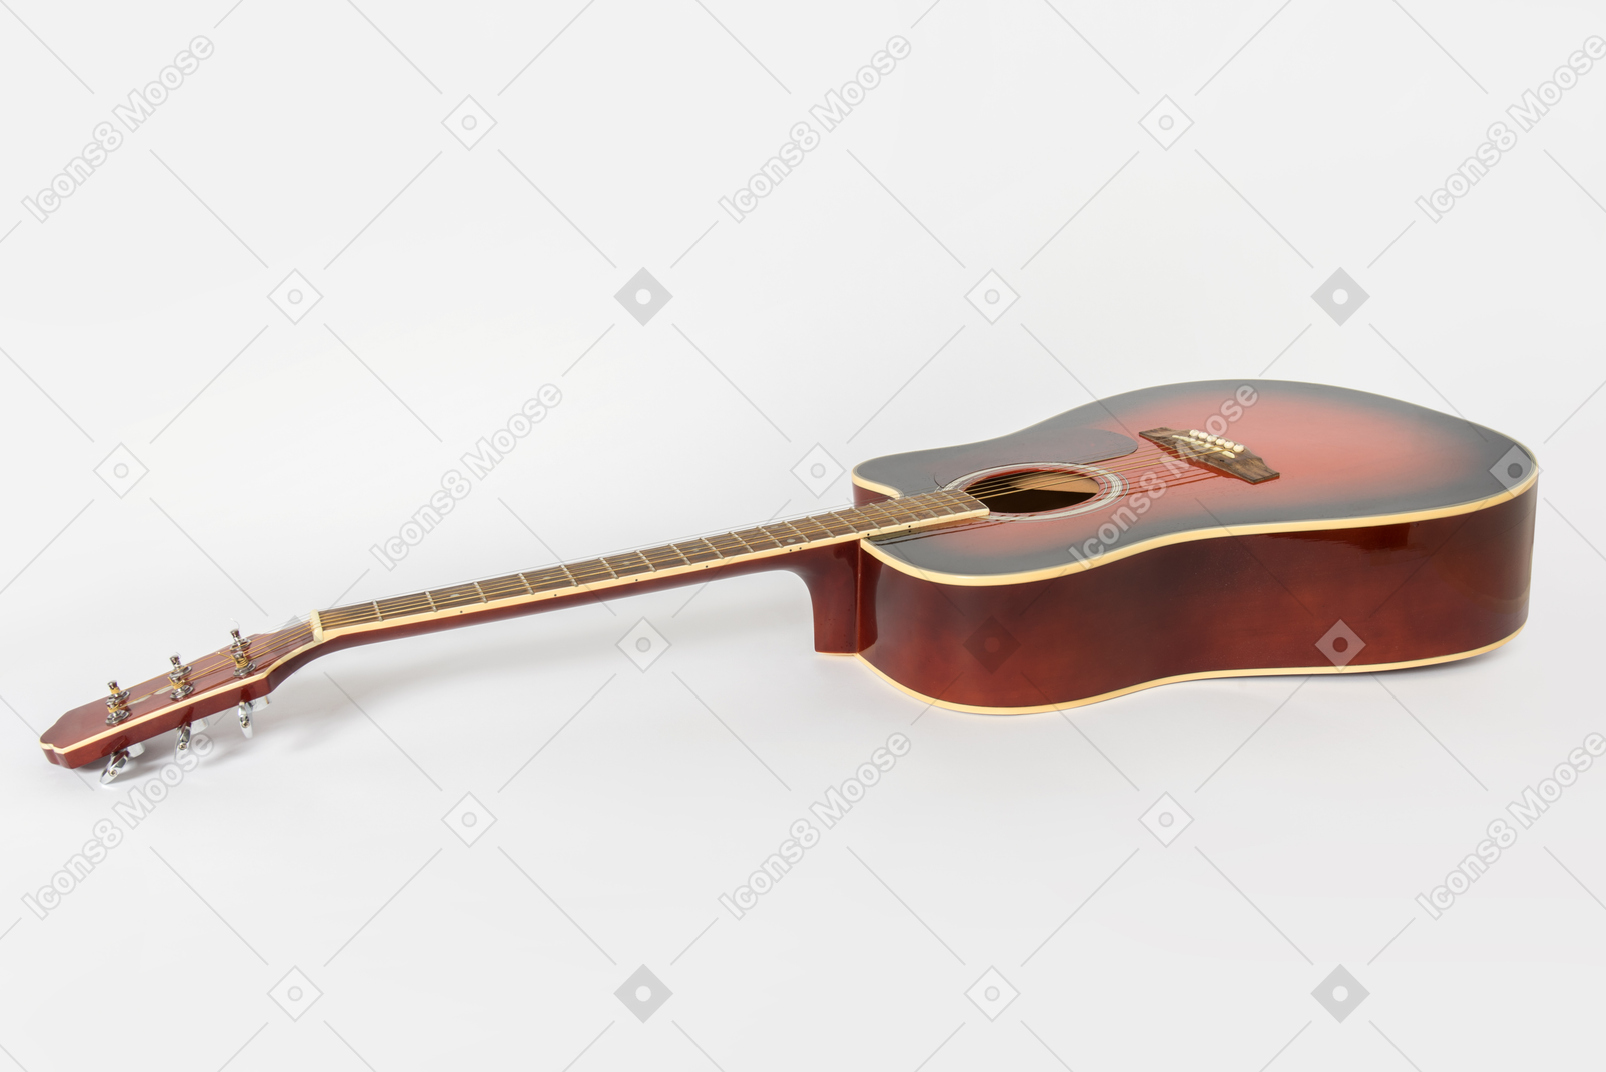 Guitar lying on white background